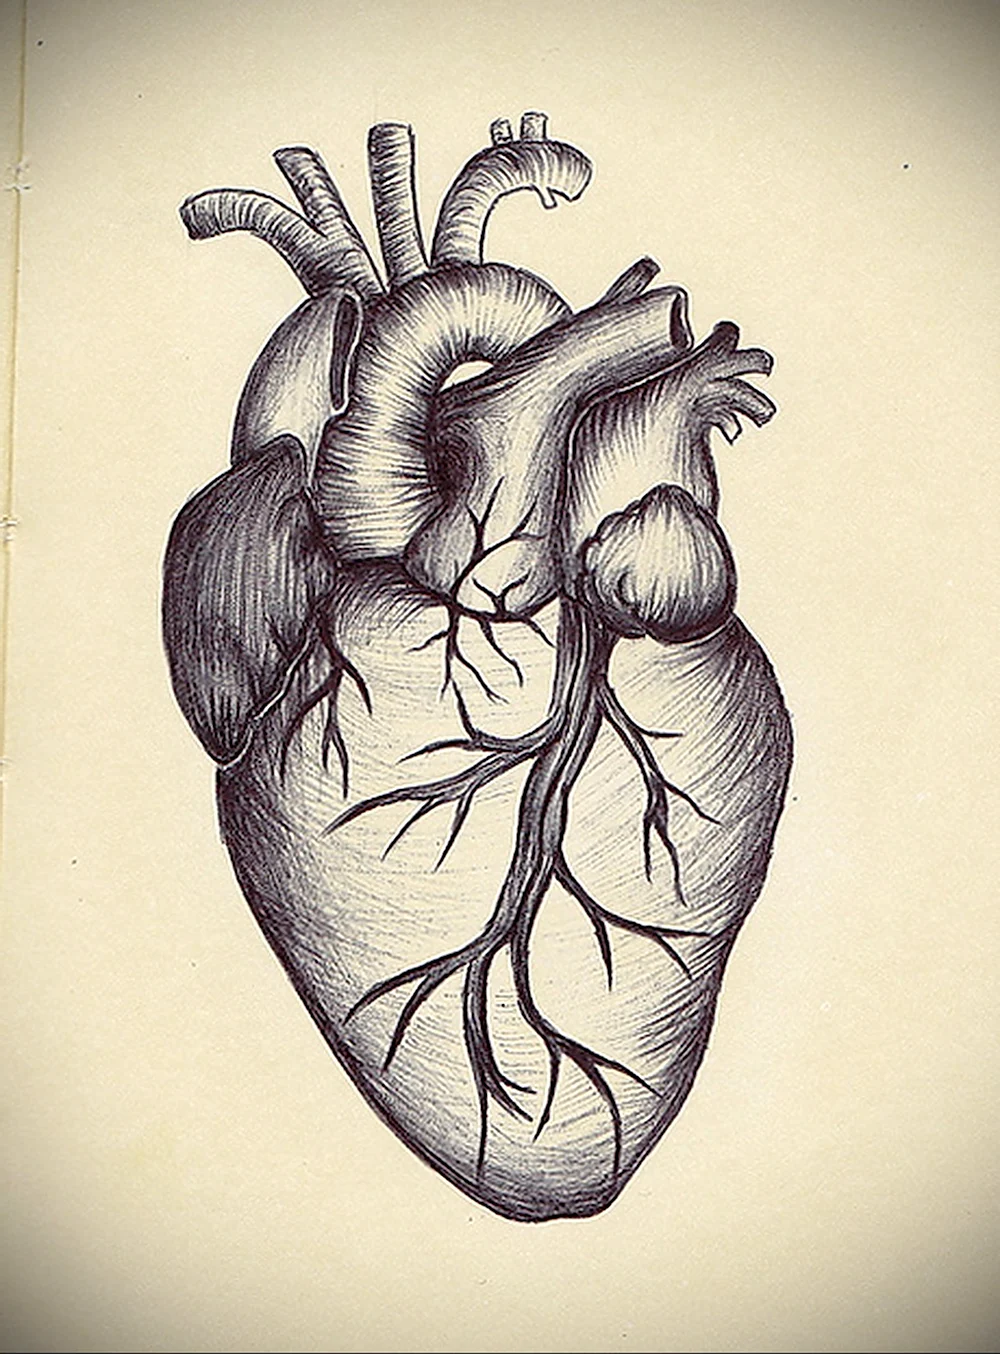 Сердце человека анатомия